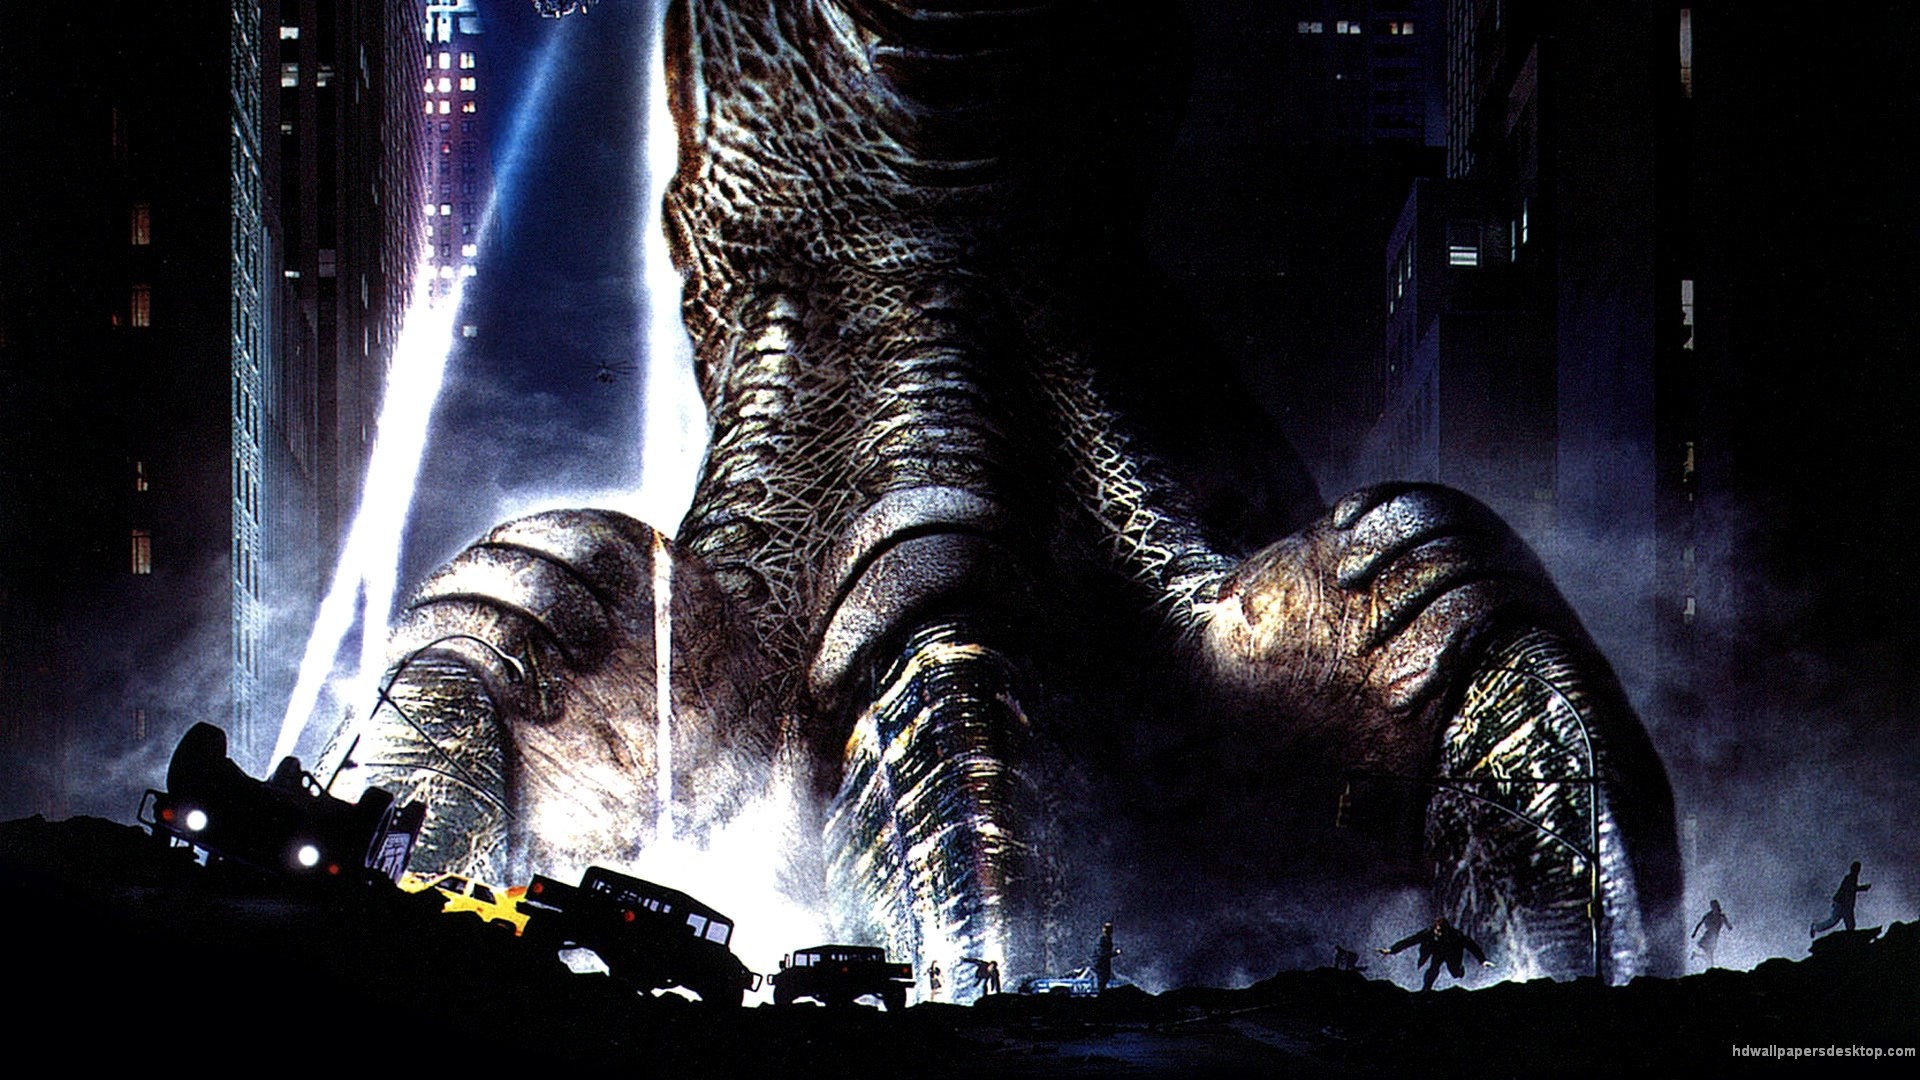 Godzilla 1998 computer desktop backgrounds, 469 kB